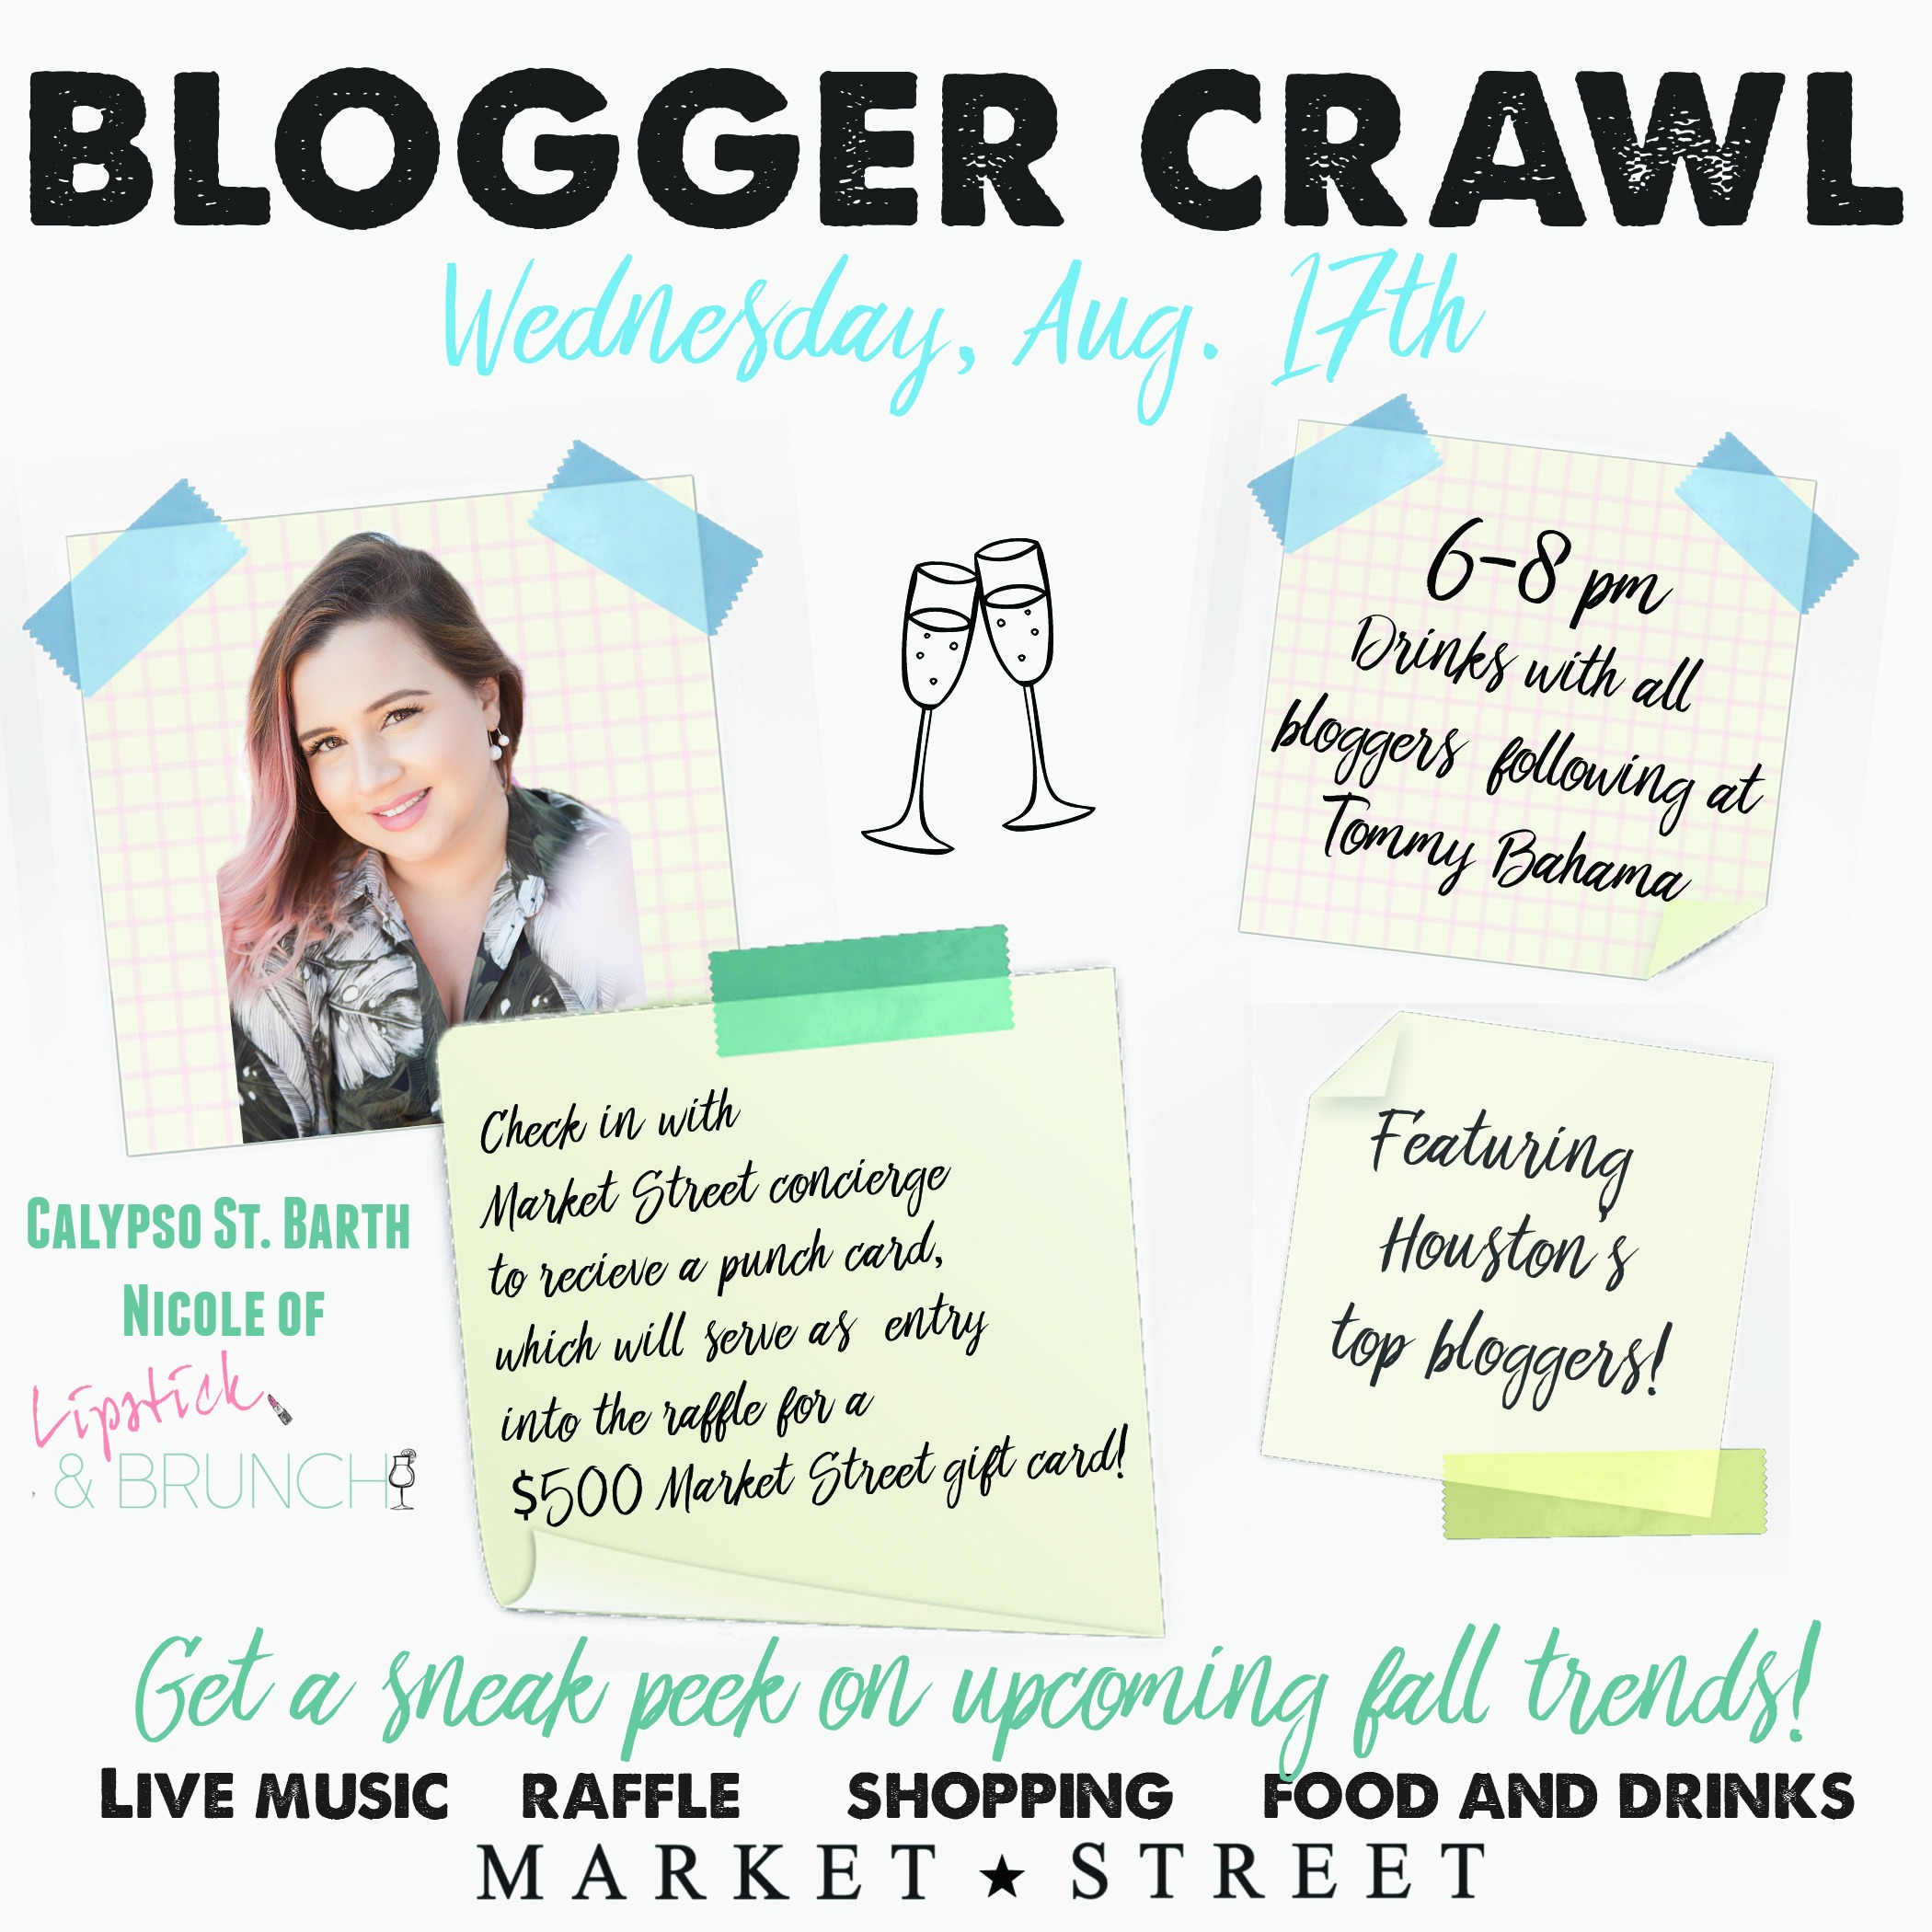 Market Street Blogger Crawl